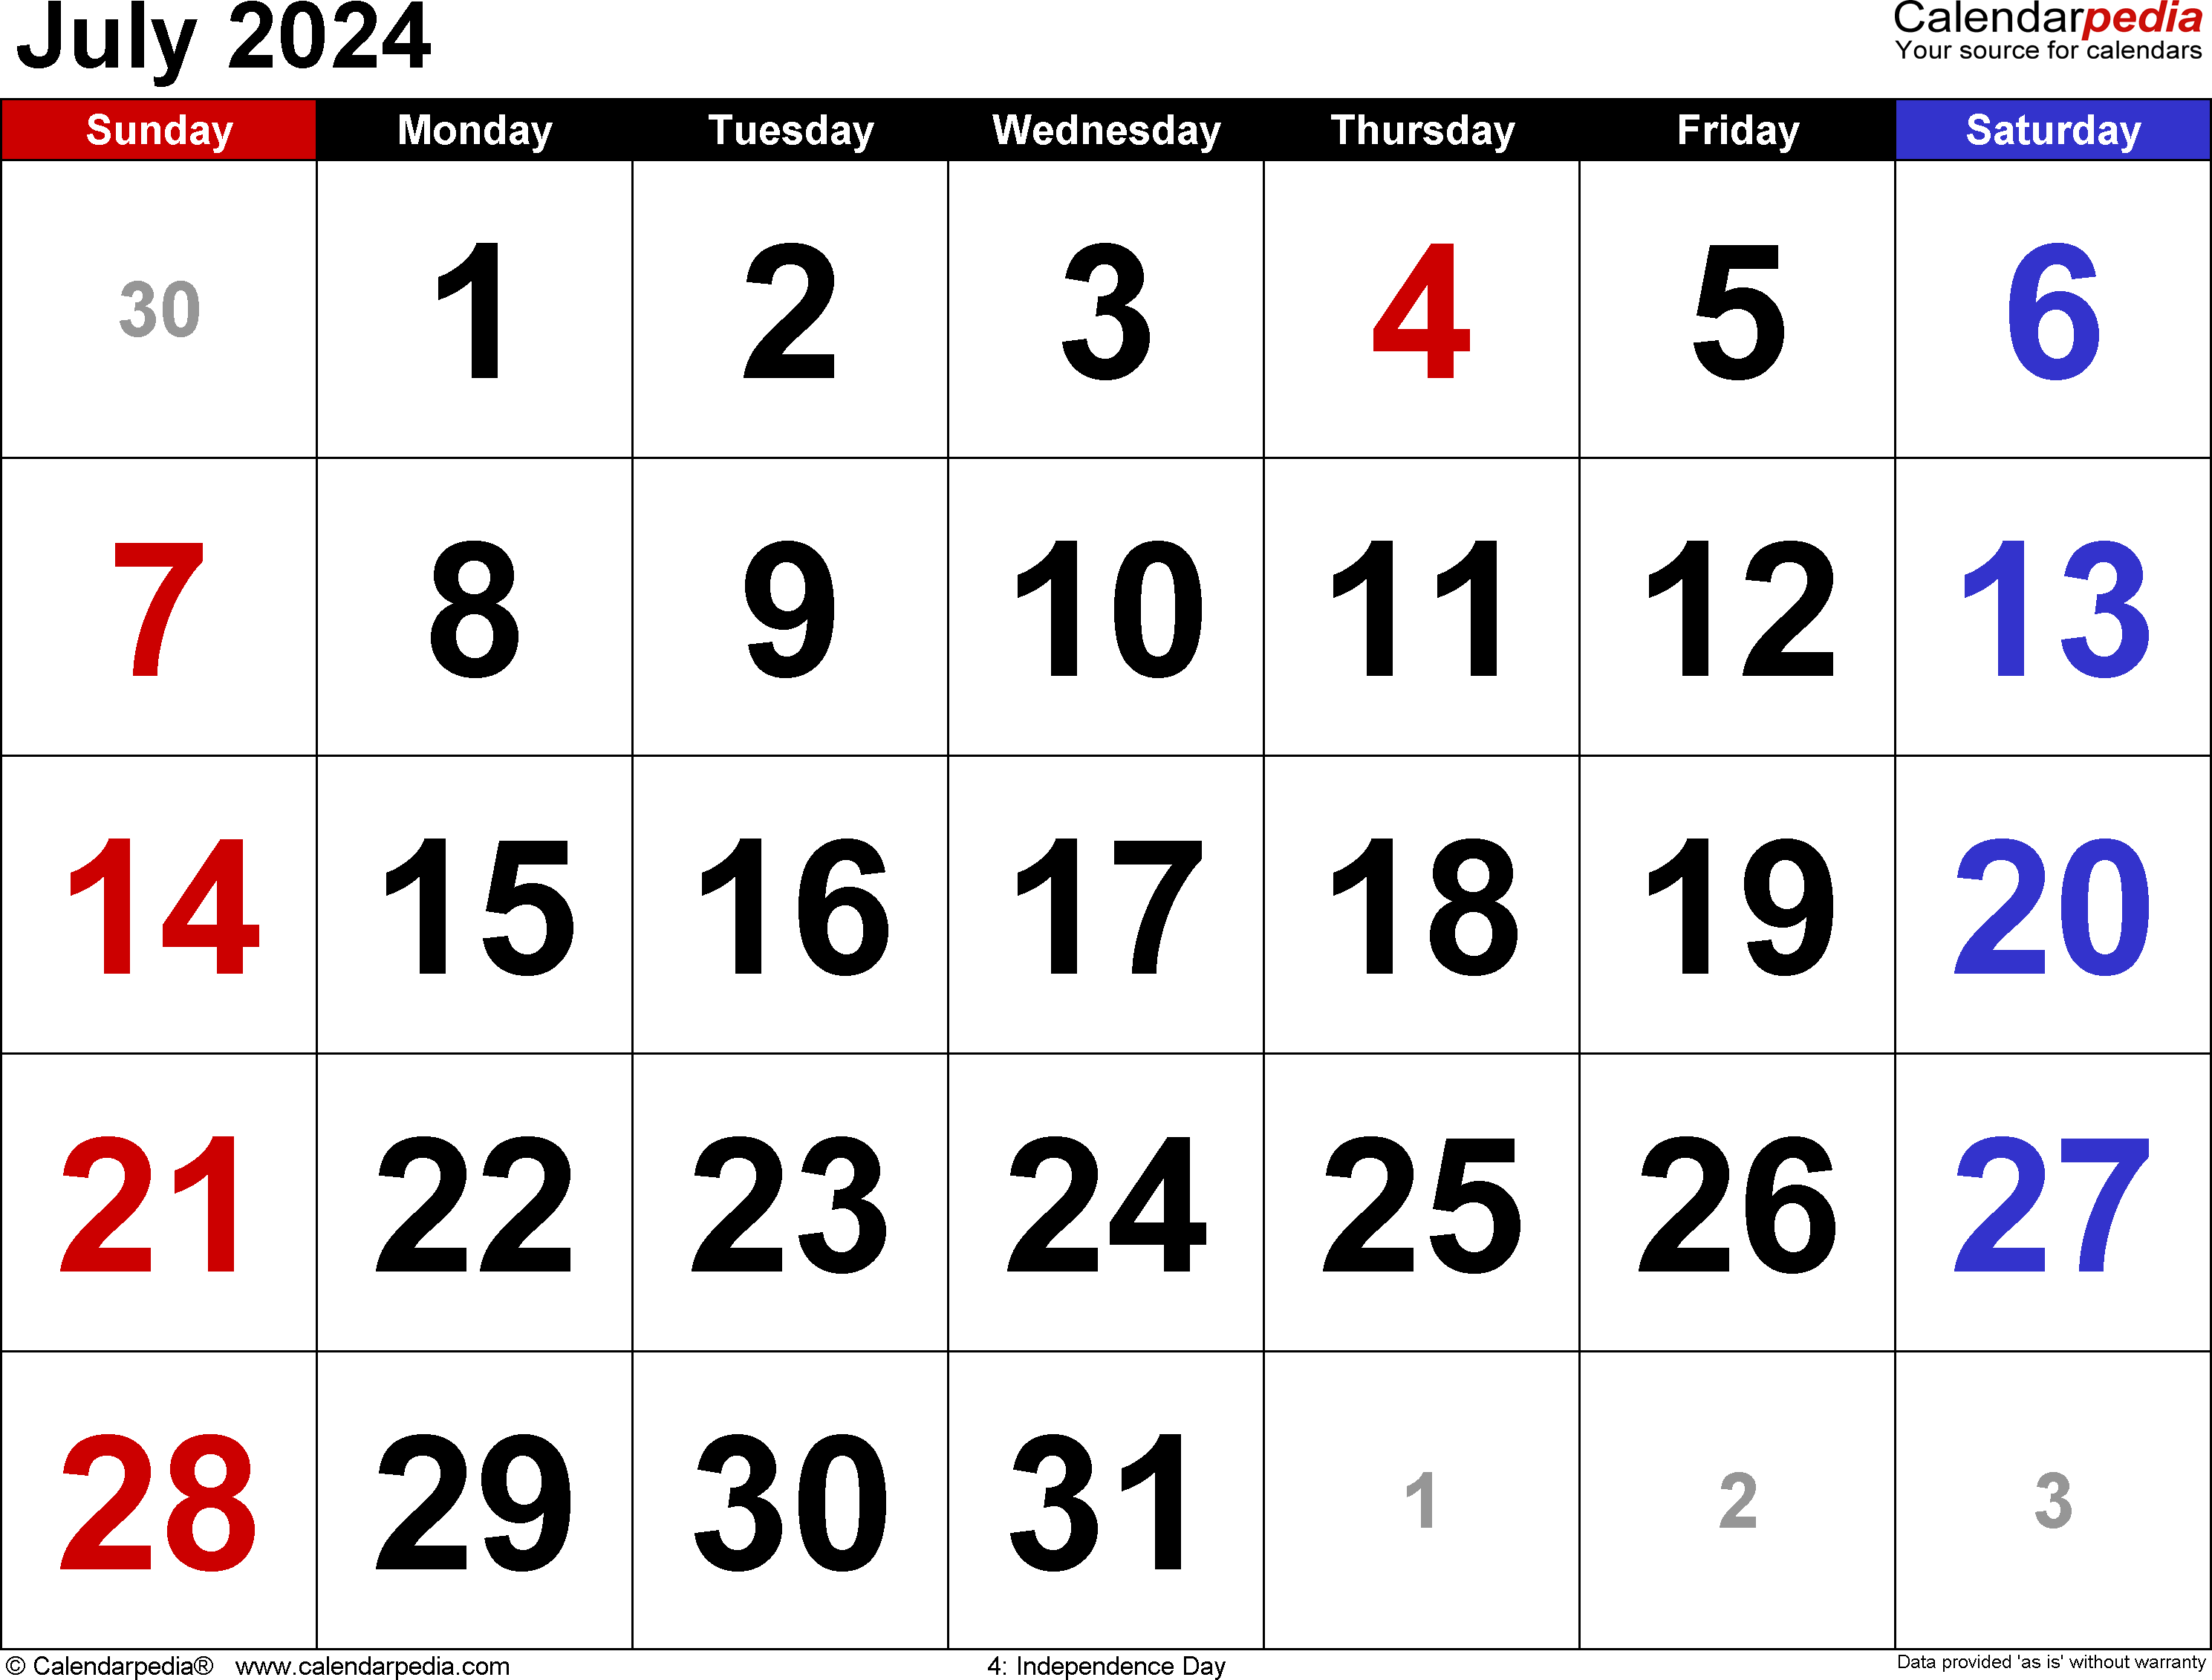 July 2024 Calendar | Templates For Word, Excel And Pdf regarding 2 Month Desk Calendar Starting July 2024